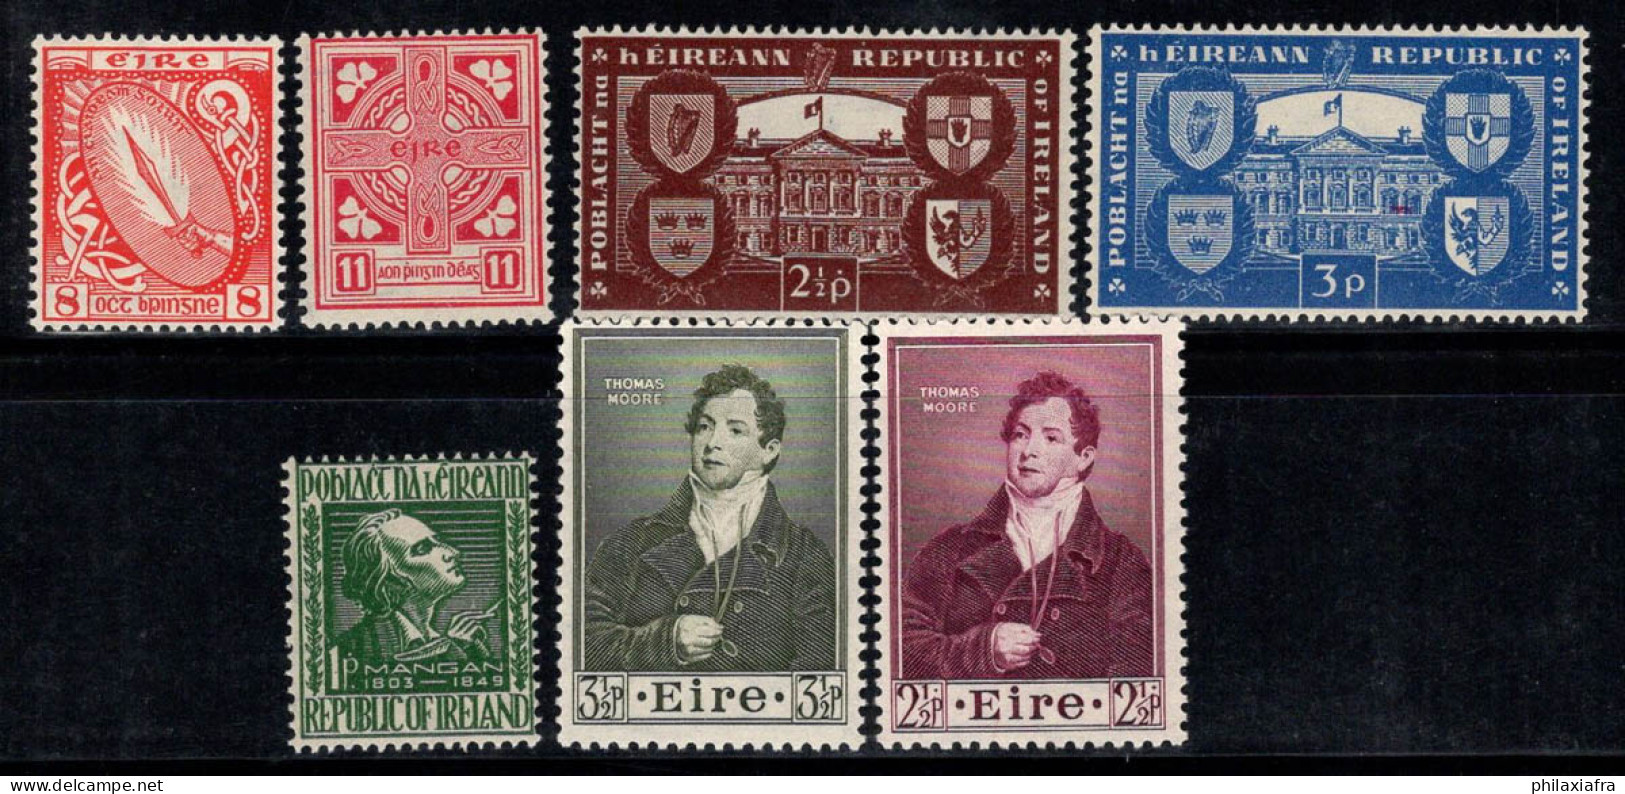 Irlande 1950 Mi. 106-110,114-115 Neuf * MH 100% Symboles, Célébrités - Ungebraucht